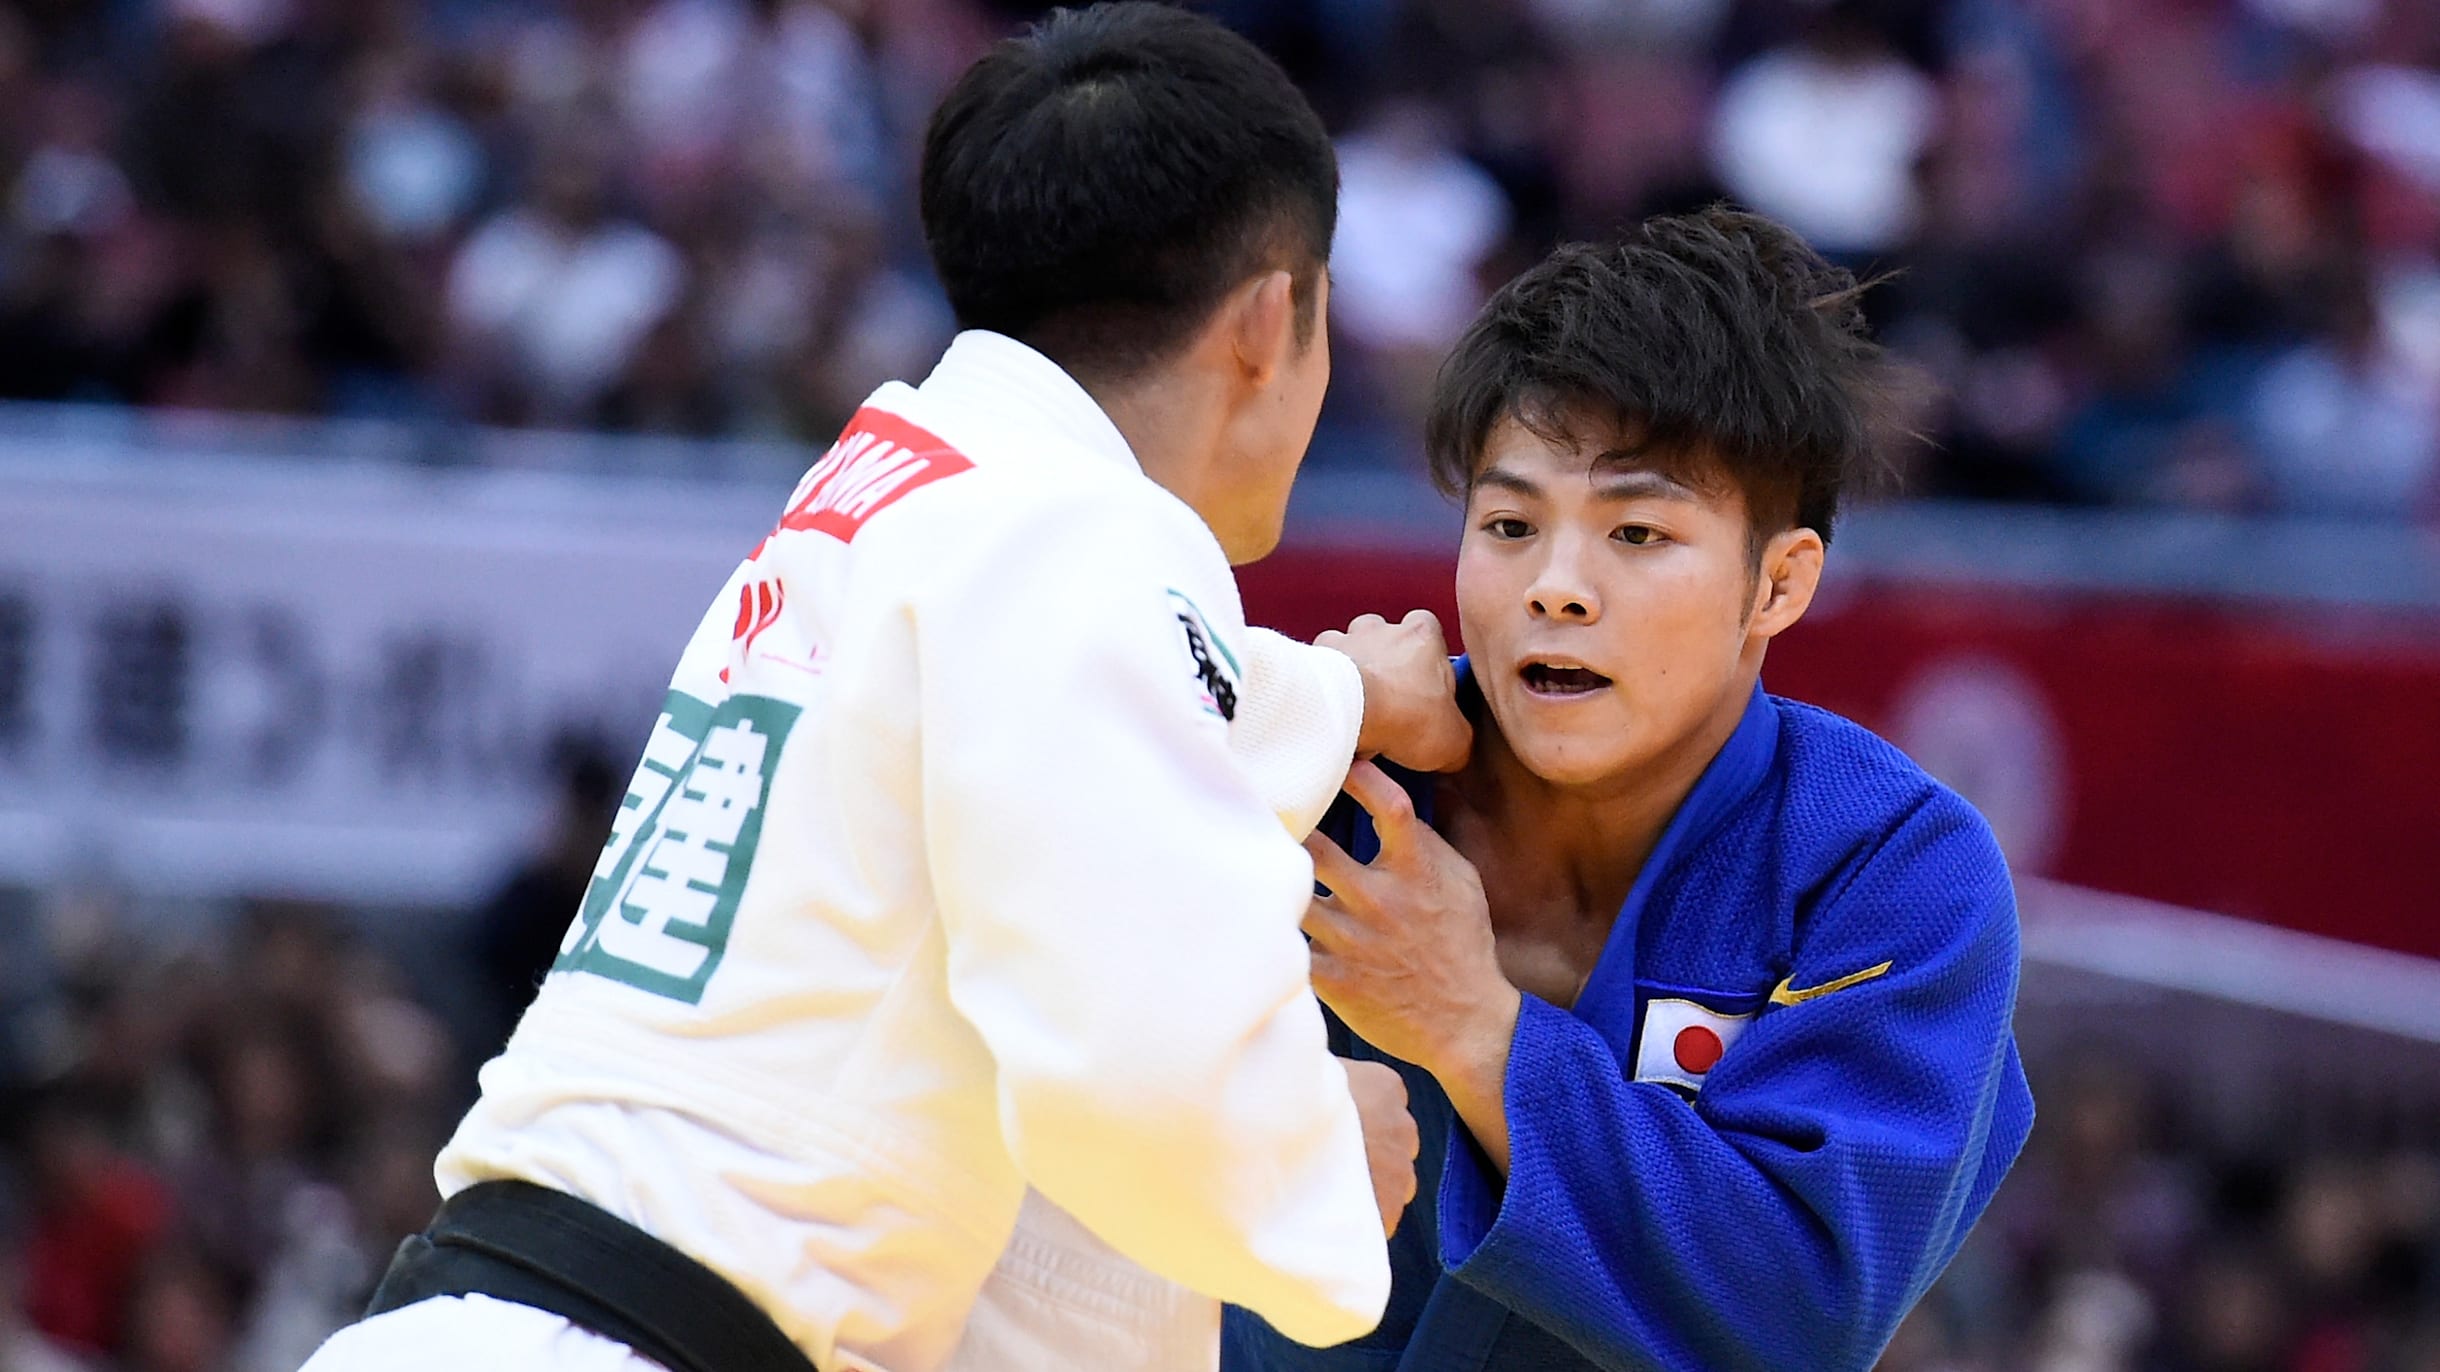 Hifumi Abe outlasts Maruyama Joshiro, wins Japan Olympic judo berth